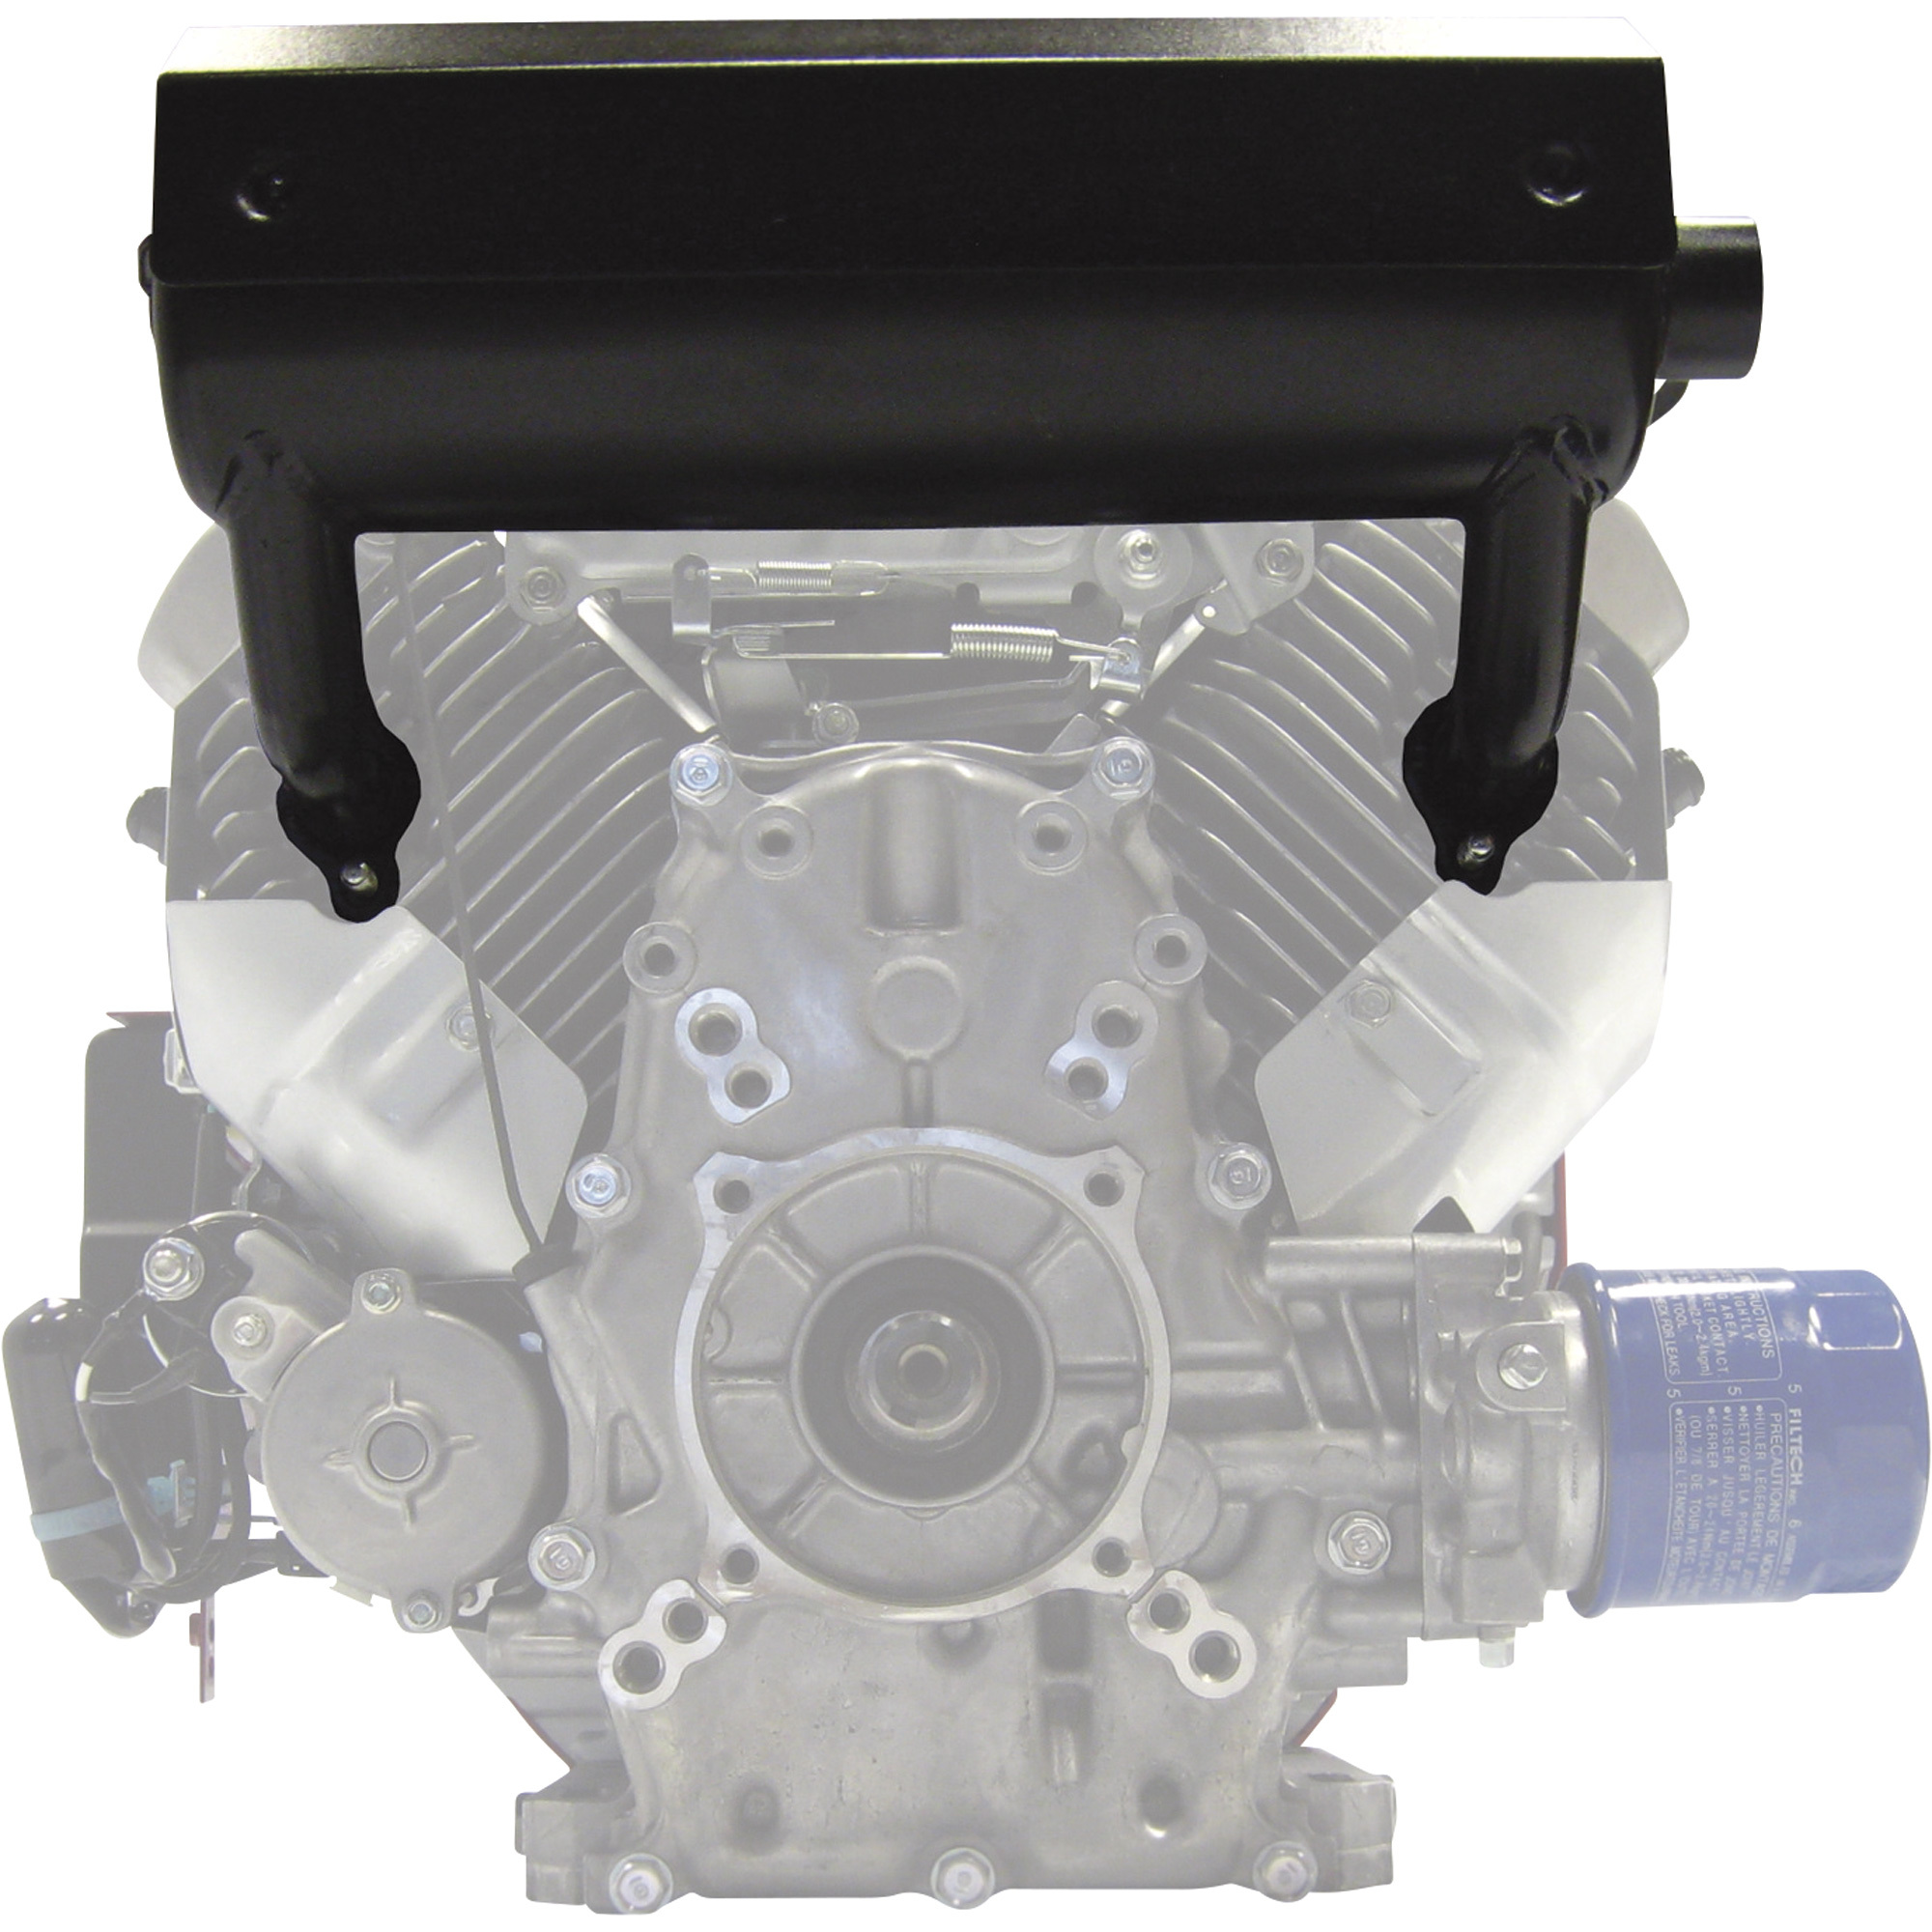 High-Mount Muffler for Honda V-Twin Engines â Fits GX630, 660 and 690 Engines, Right/Oil Filter Side Mount, Model MUF-0560.SIL